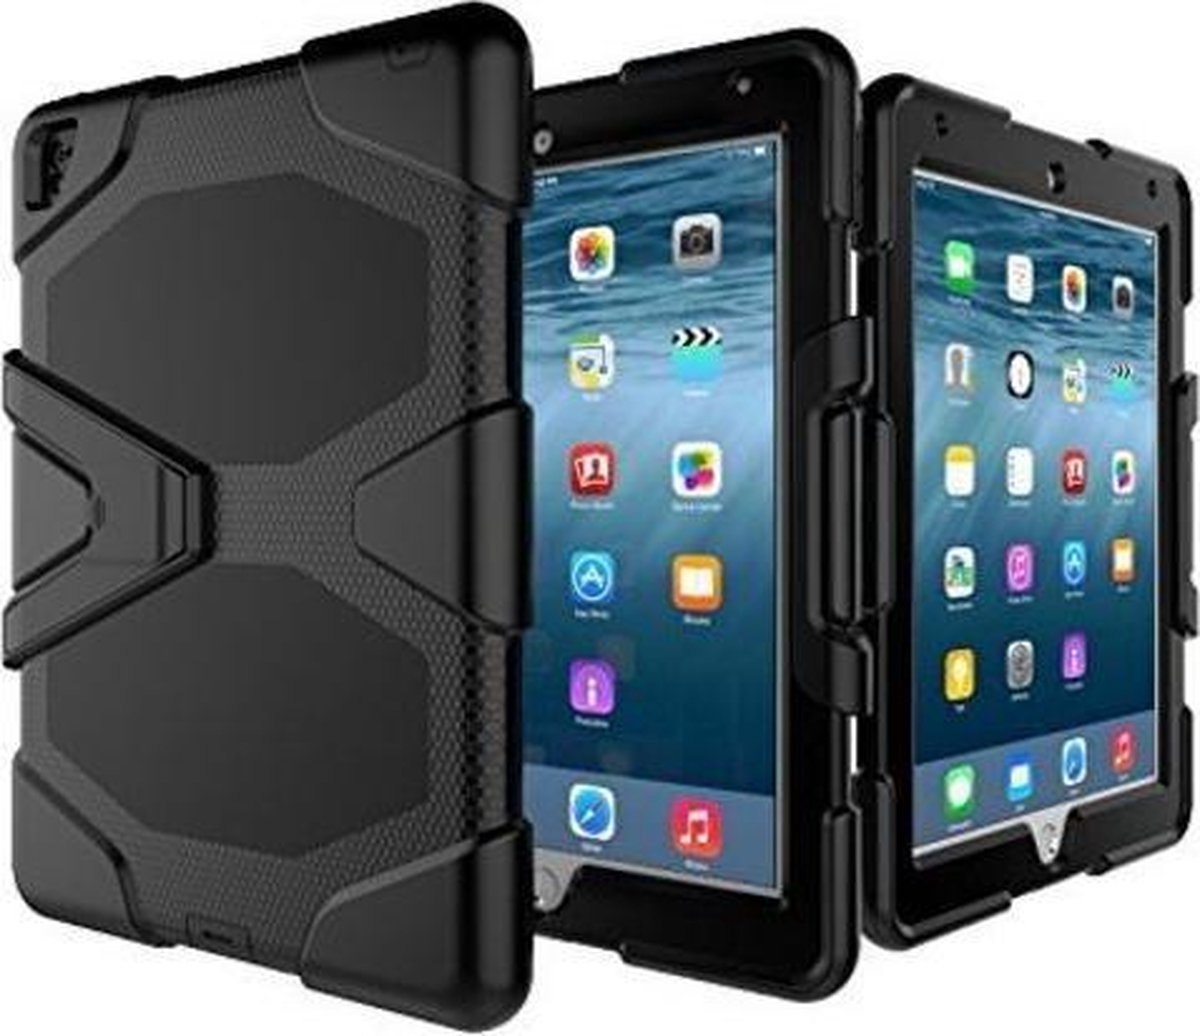 SMH Royal - Survivor Tough Combo iPad Air Shockproof Case Hoesje / Cover / Hoes / Tablethoes | Zeer sterk en robuust met screenprotector | Zwart